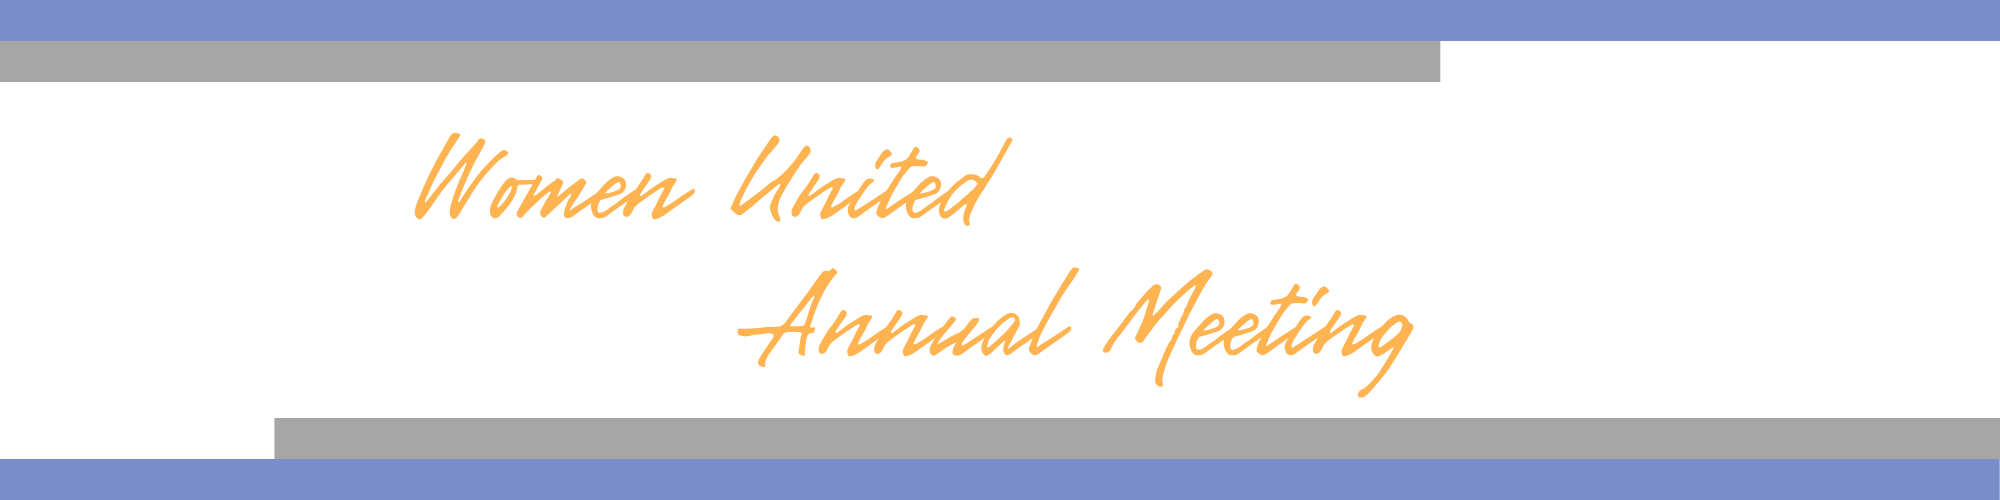 Women United Annual Meeting